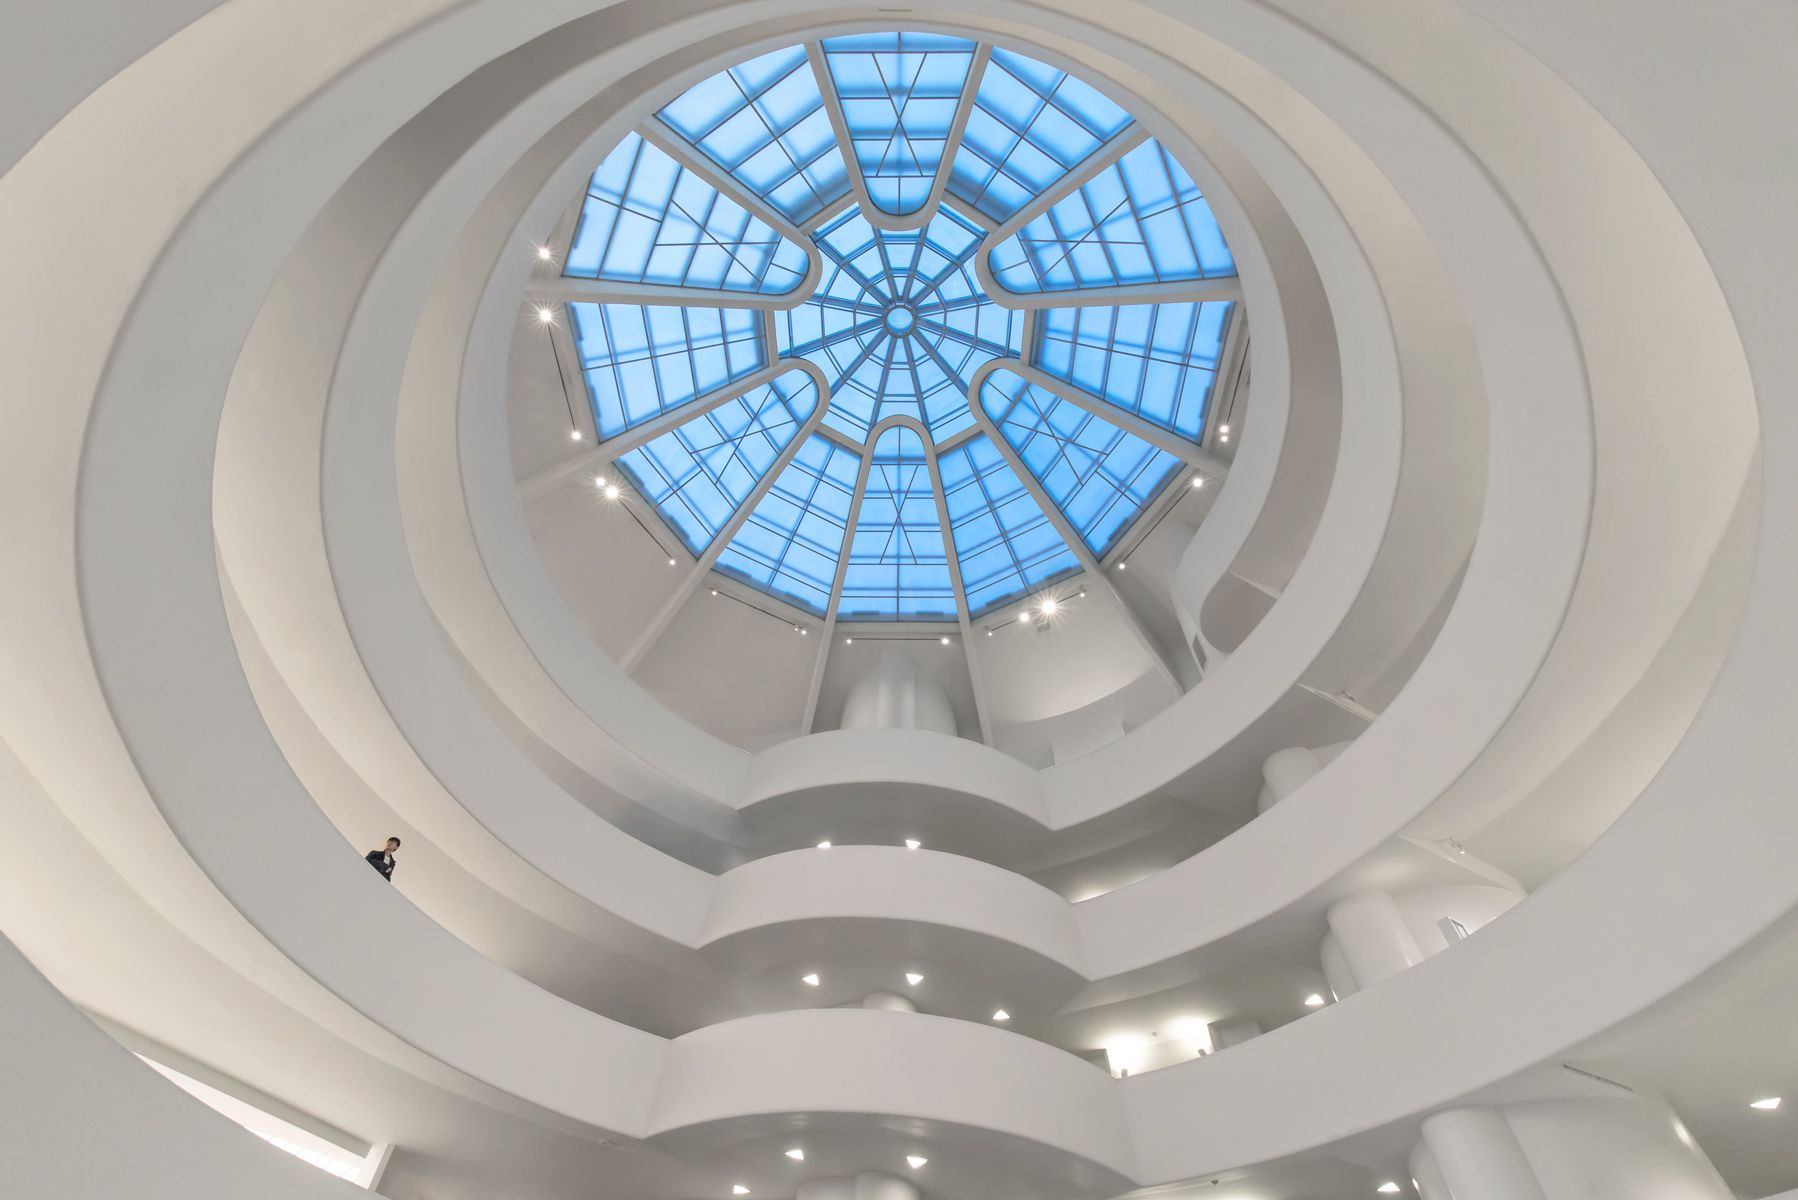 Guggenheim MuseumNew York, New YorkArchitect: Frank Lloyd Wright